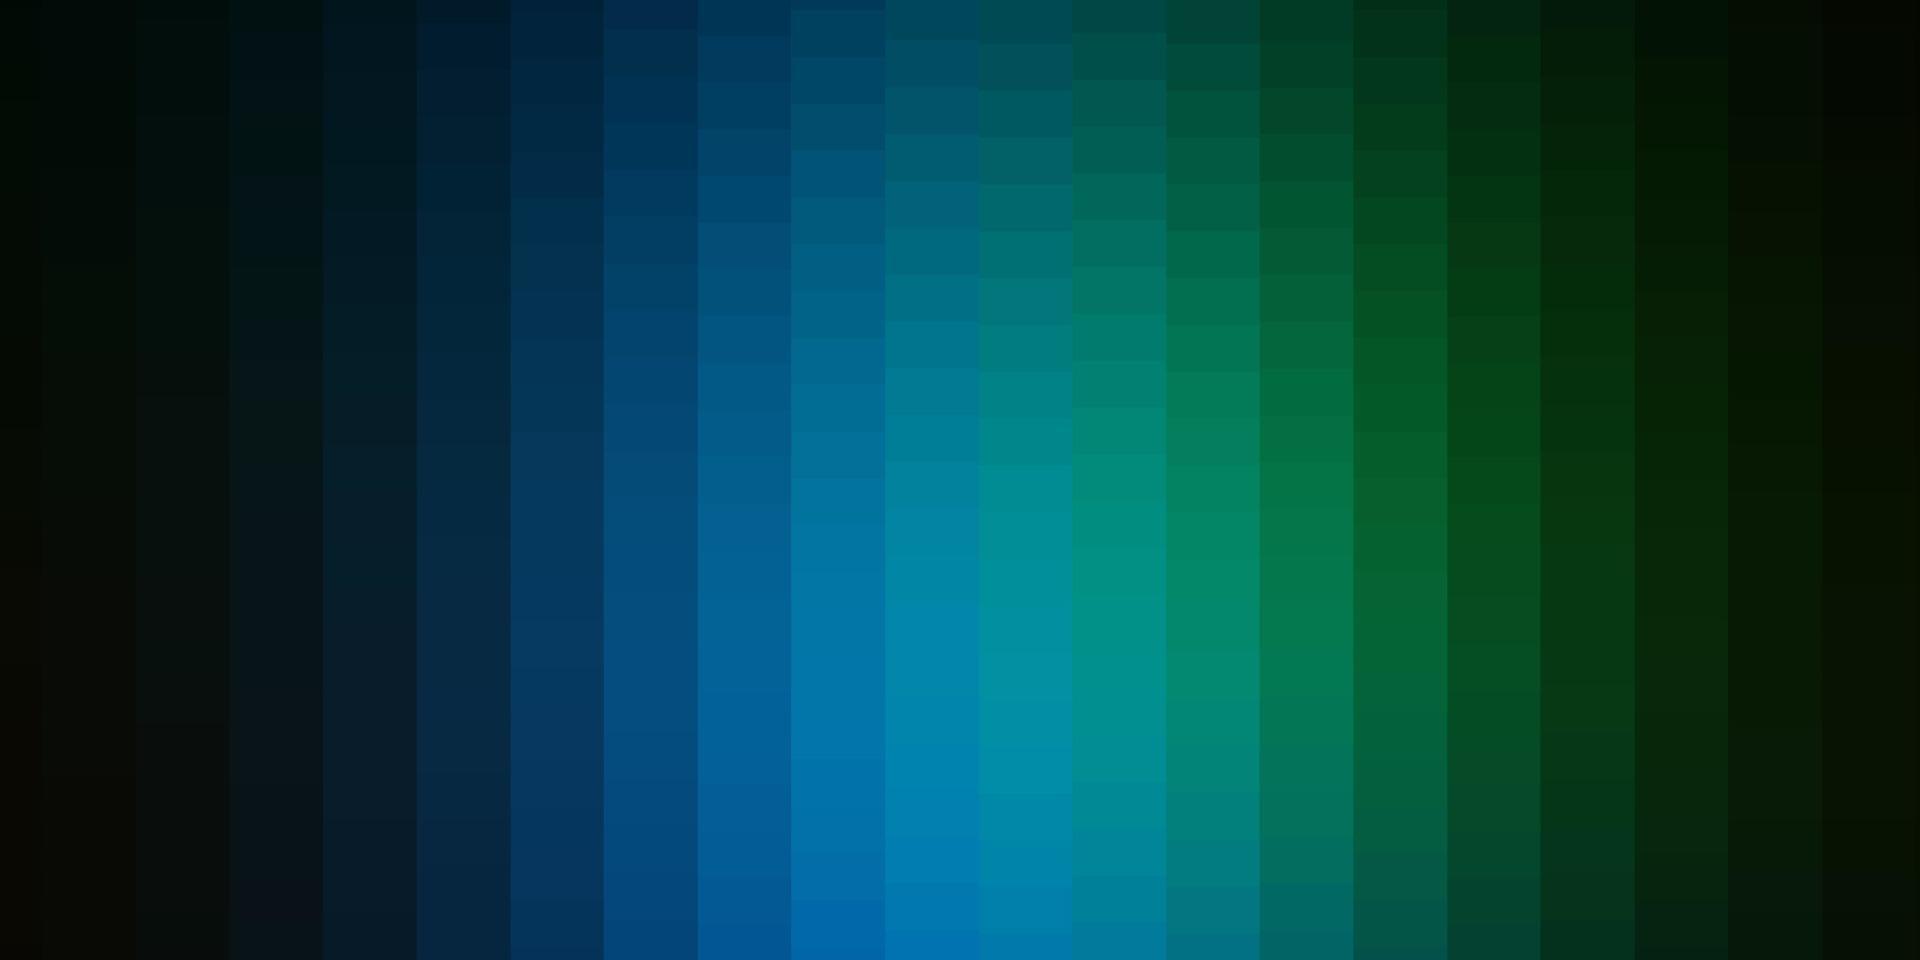 Dark Blue, Green vector texture in rectangular style.